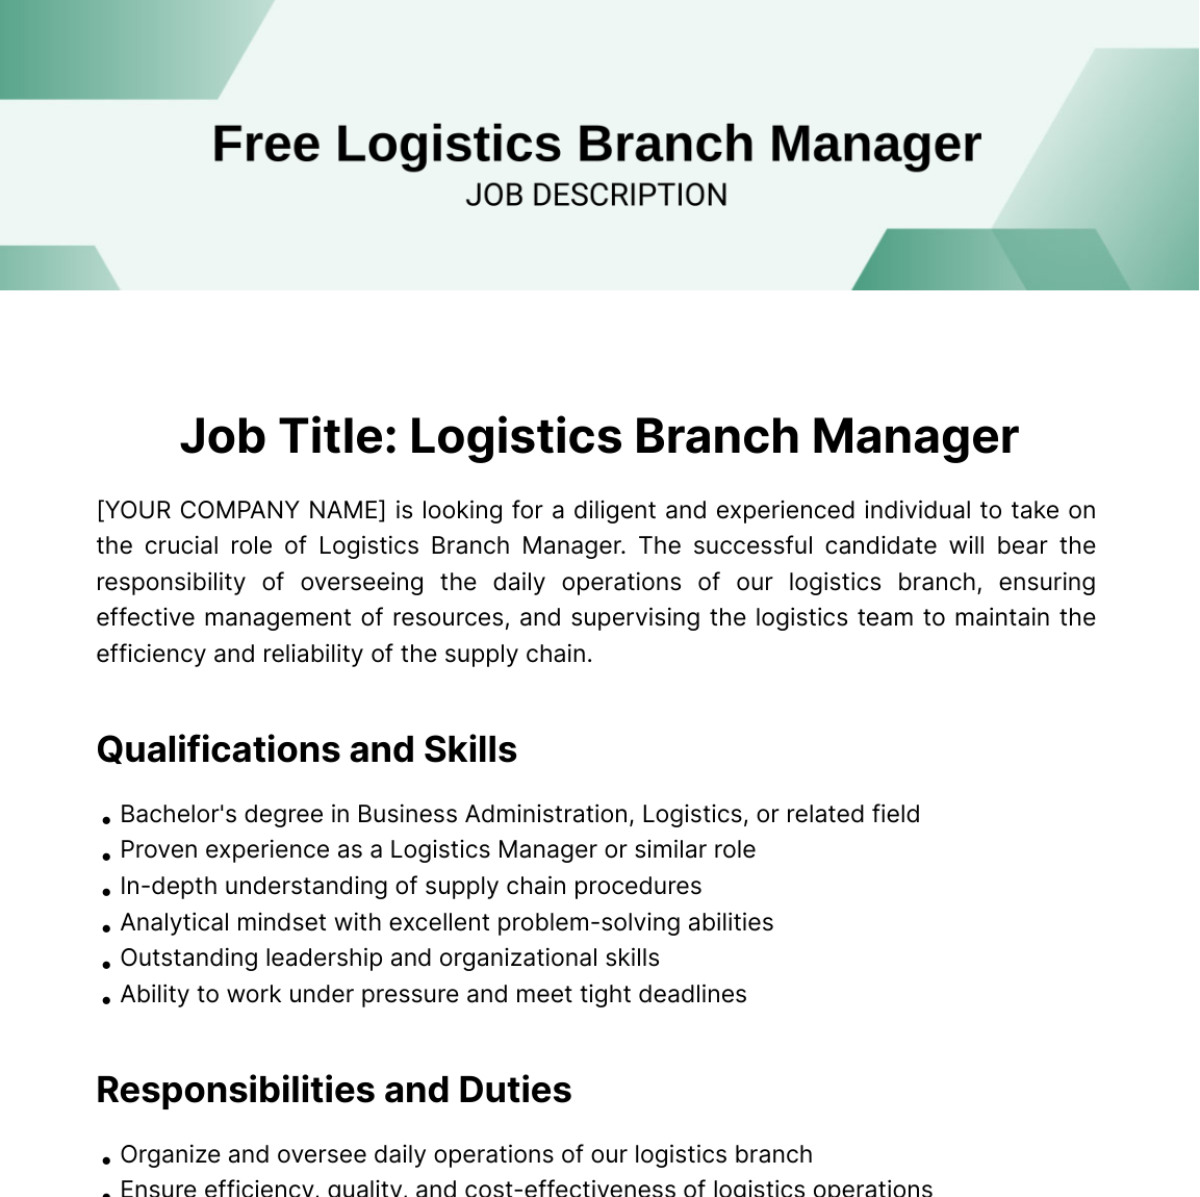 Free Logistics Branch Manager Job Description Template